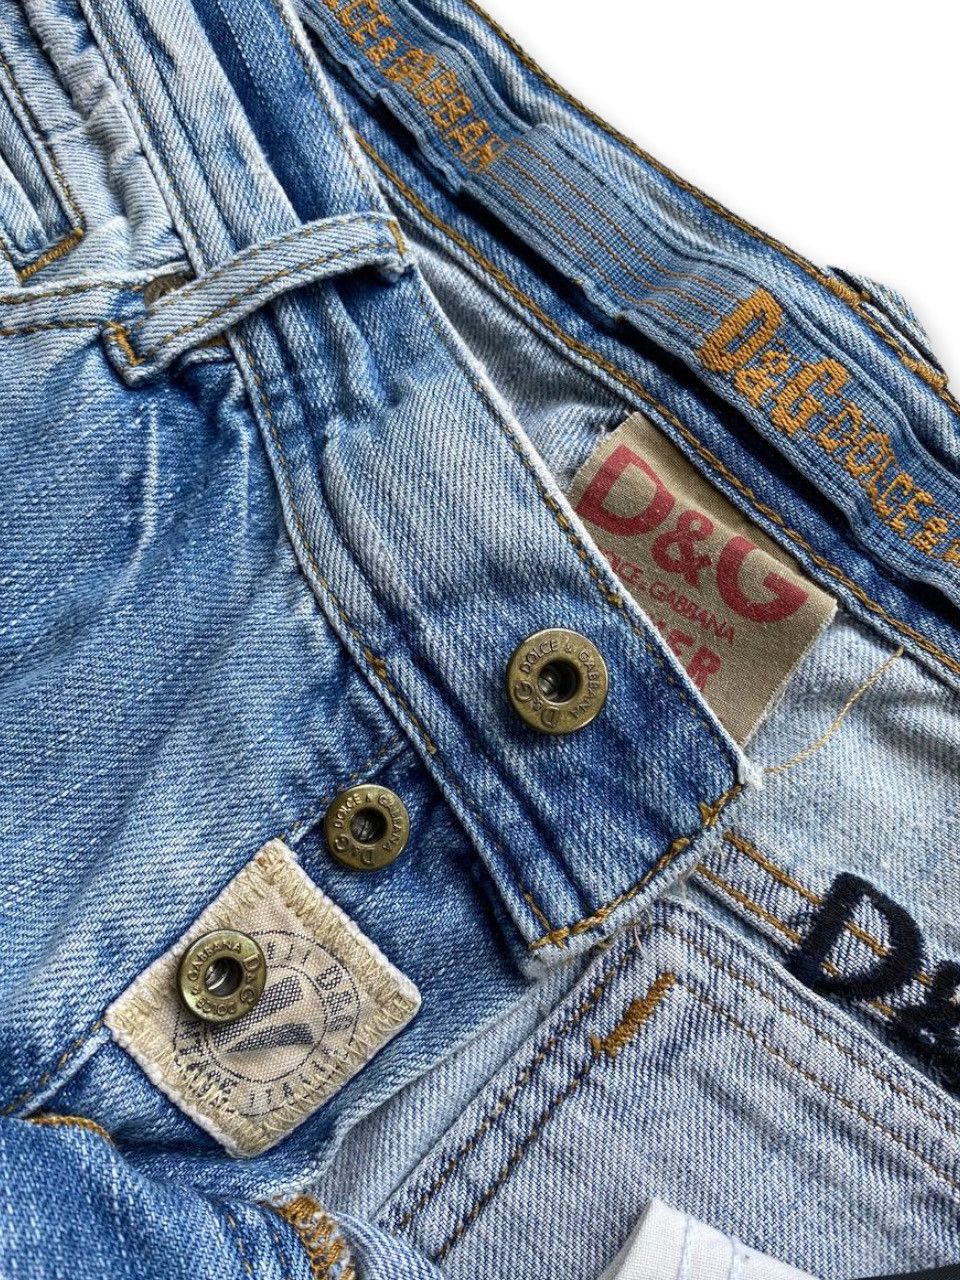 Dolce & Gabbana Dolce & Gabbana Audacious Straight Jeans Denim Pants Size US 36 / EU 52 - 5 Thumbnail